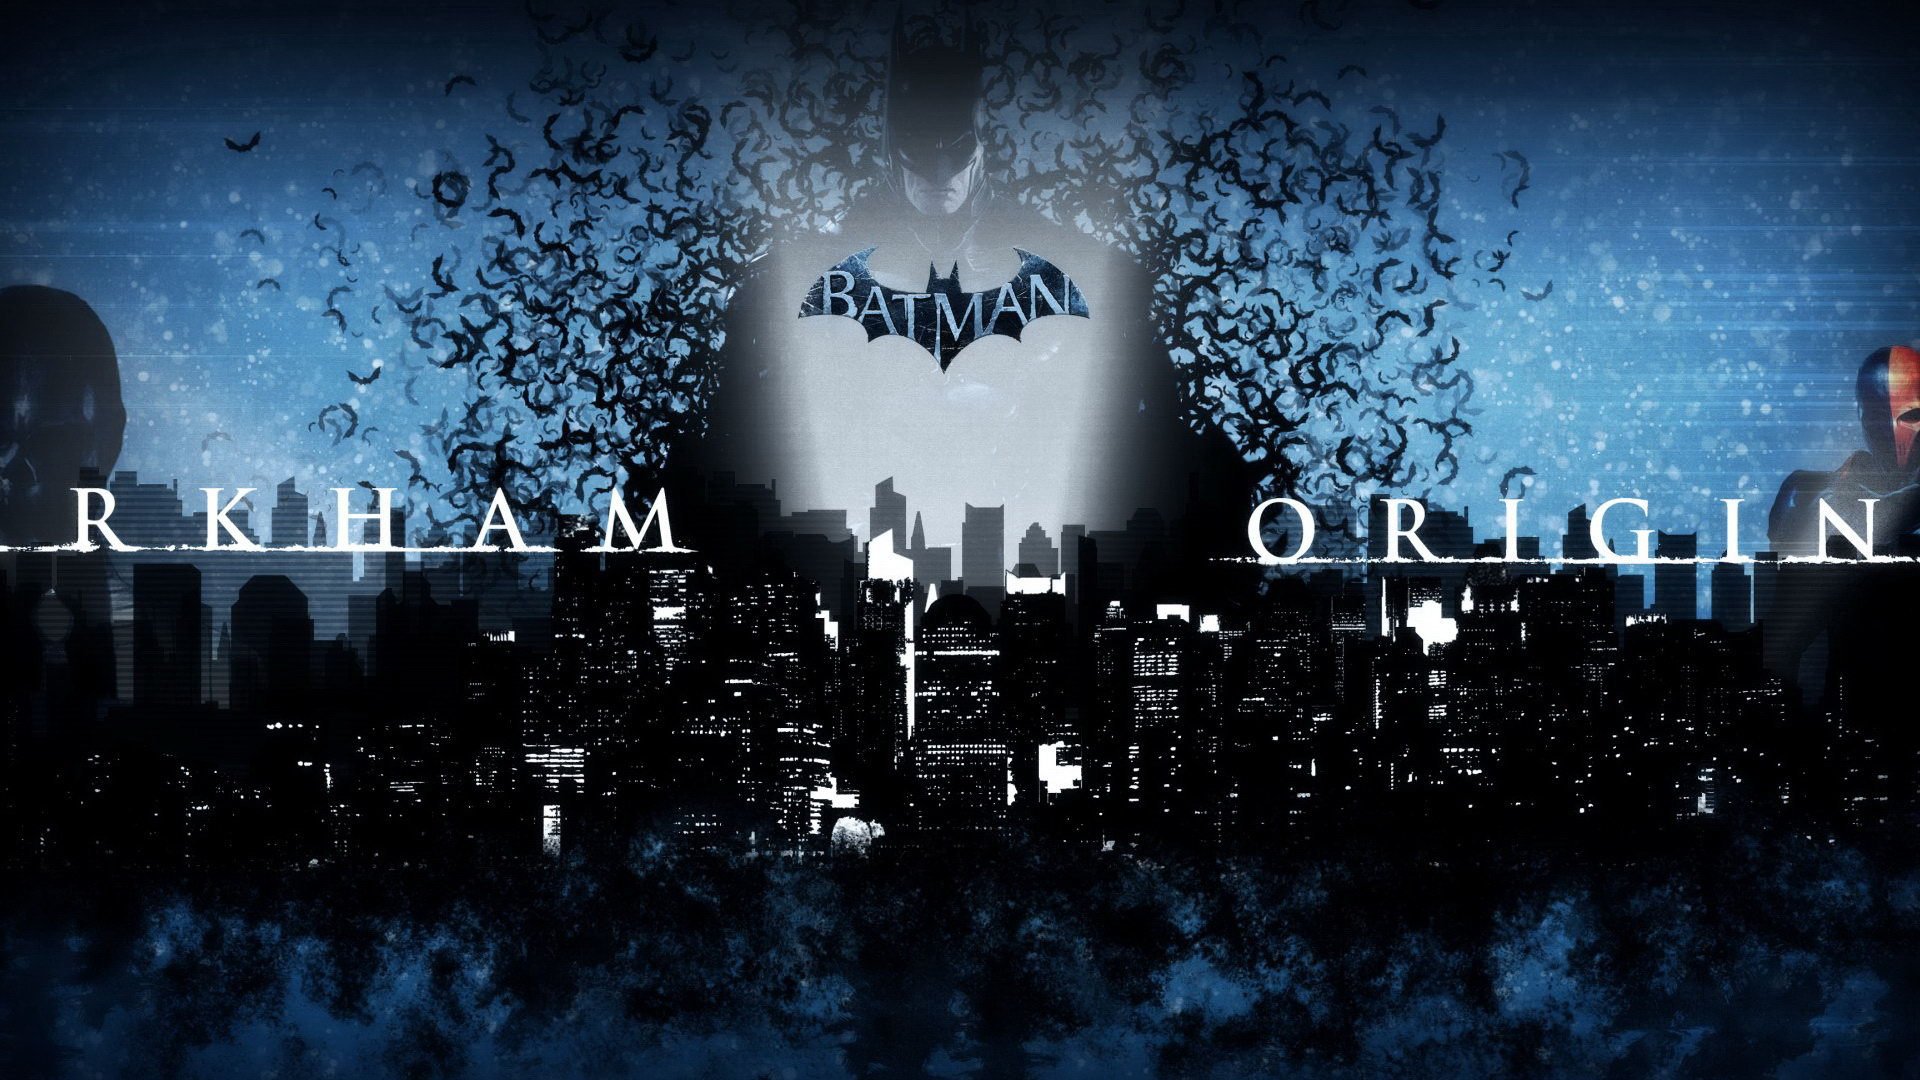 Batman Arkham Origins screensaver hd wallpapers and images 1920x1080